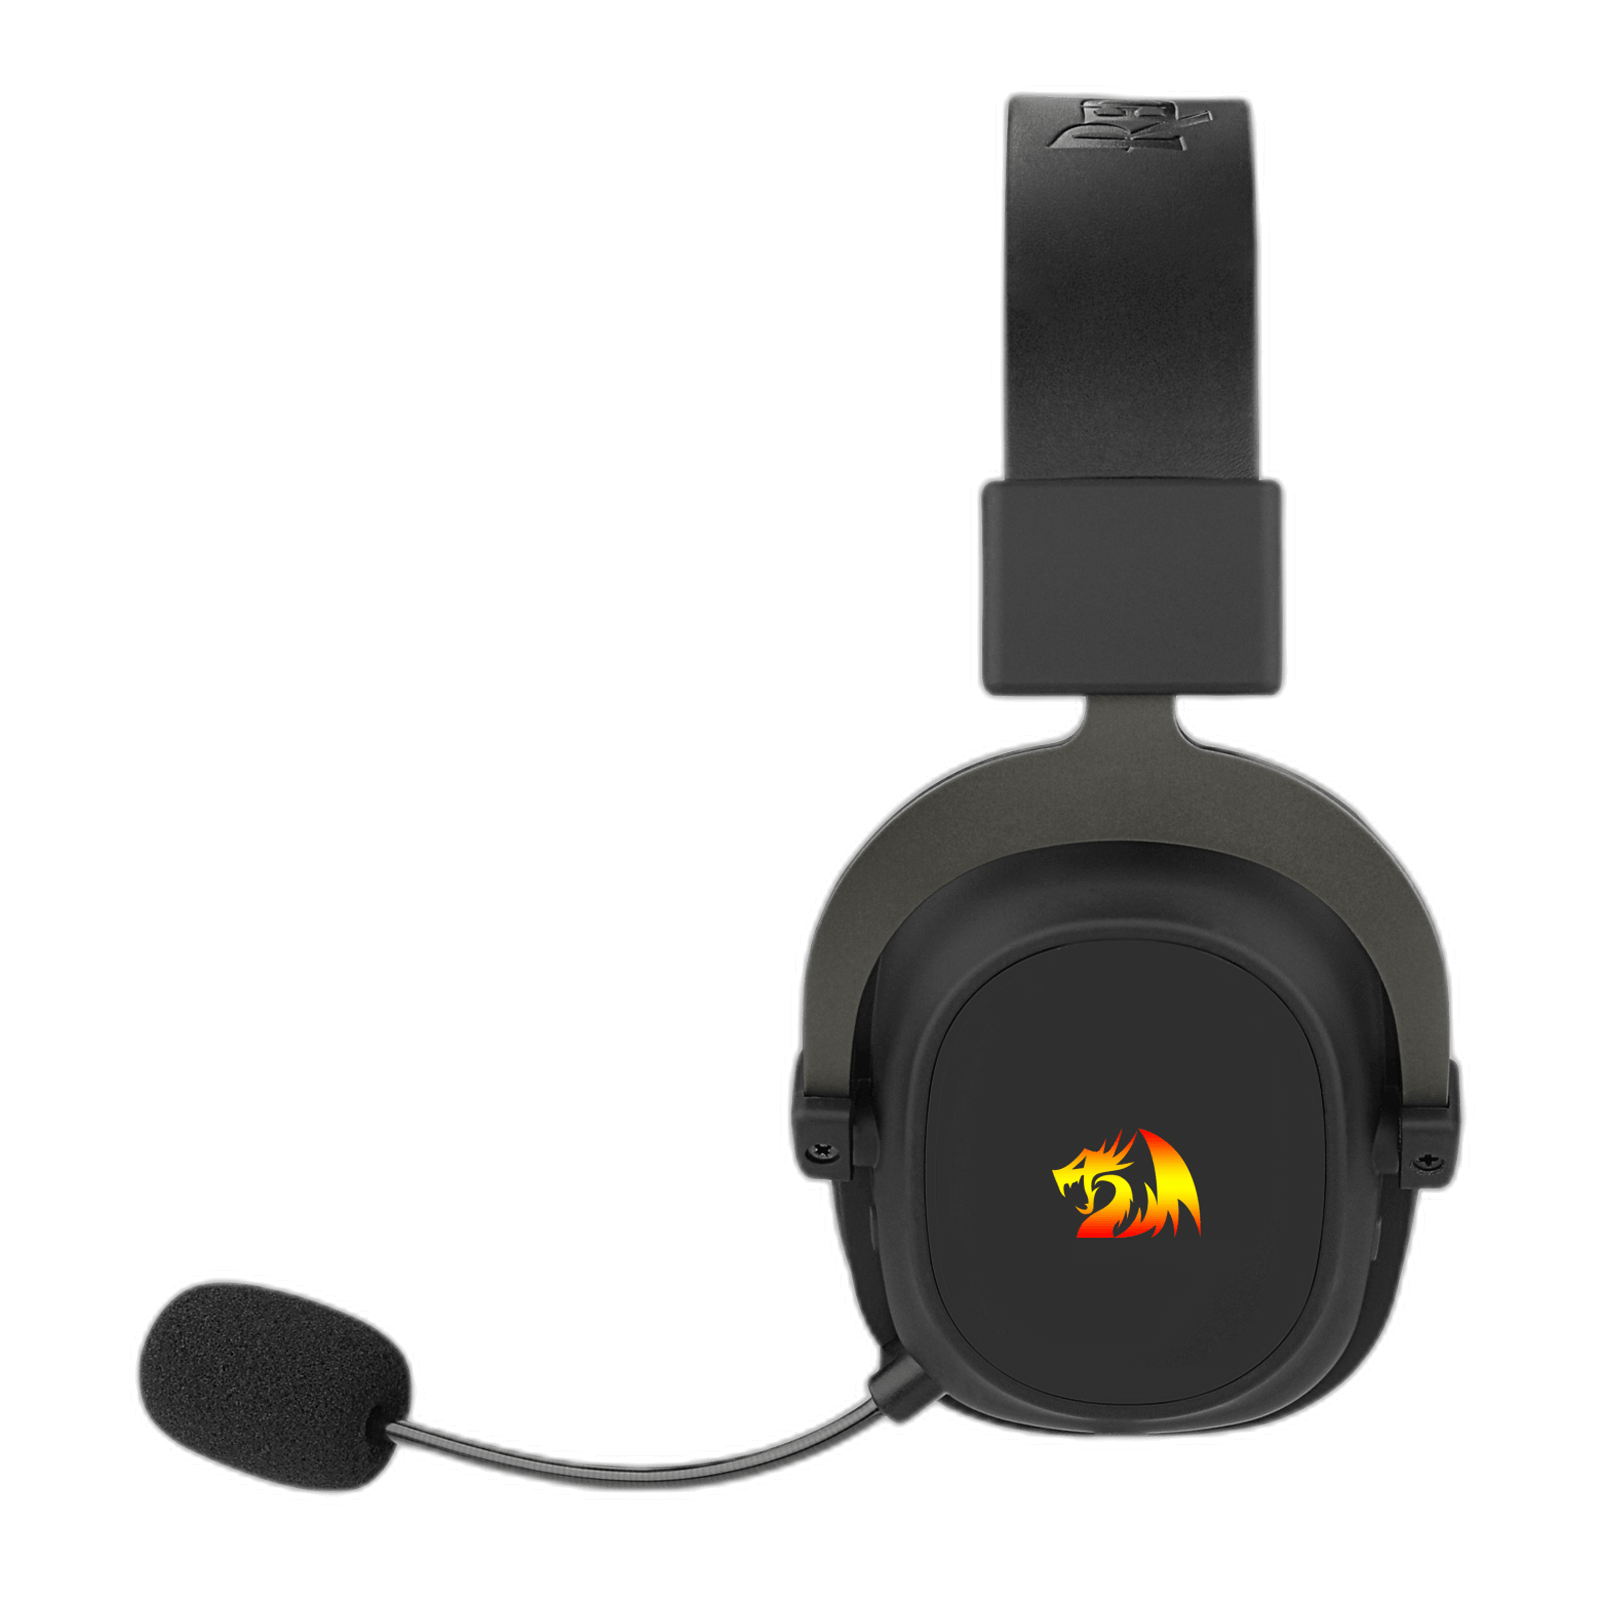 Redragon H510 Zeus-X RGB Wireless Gaming Headset